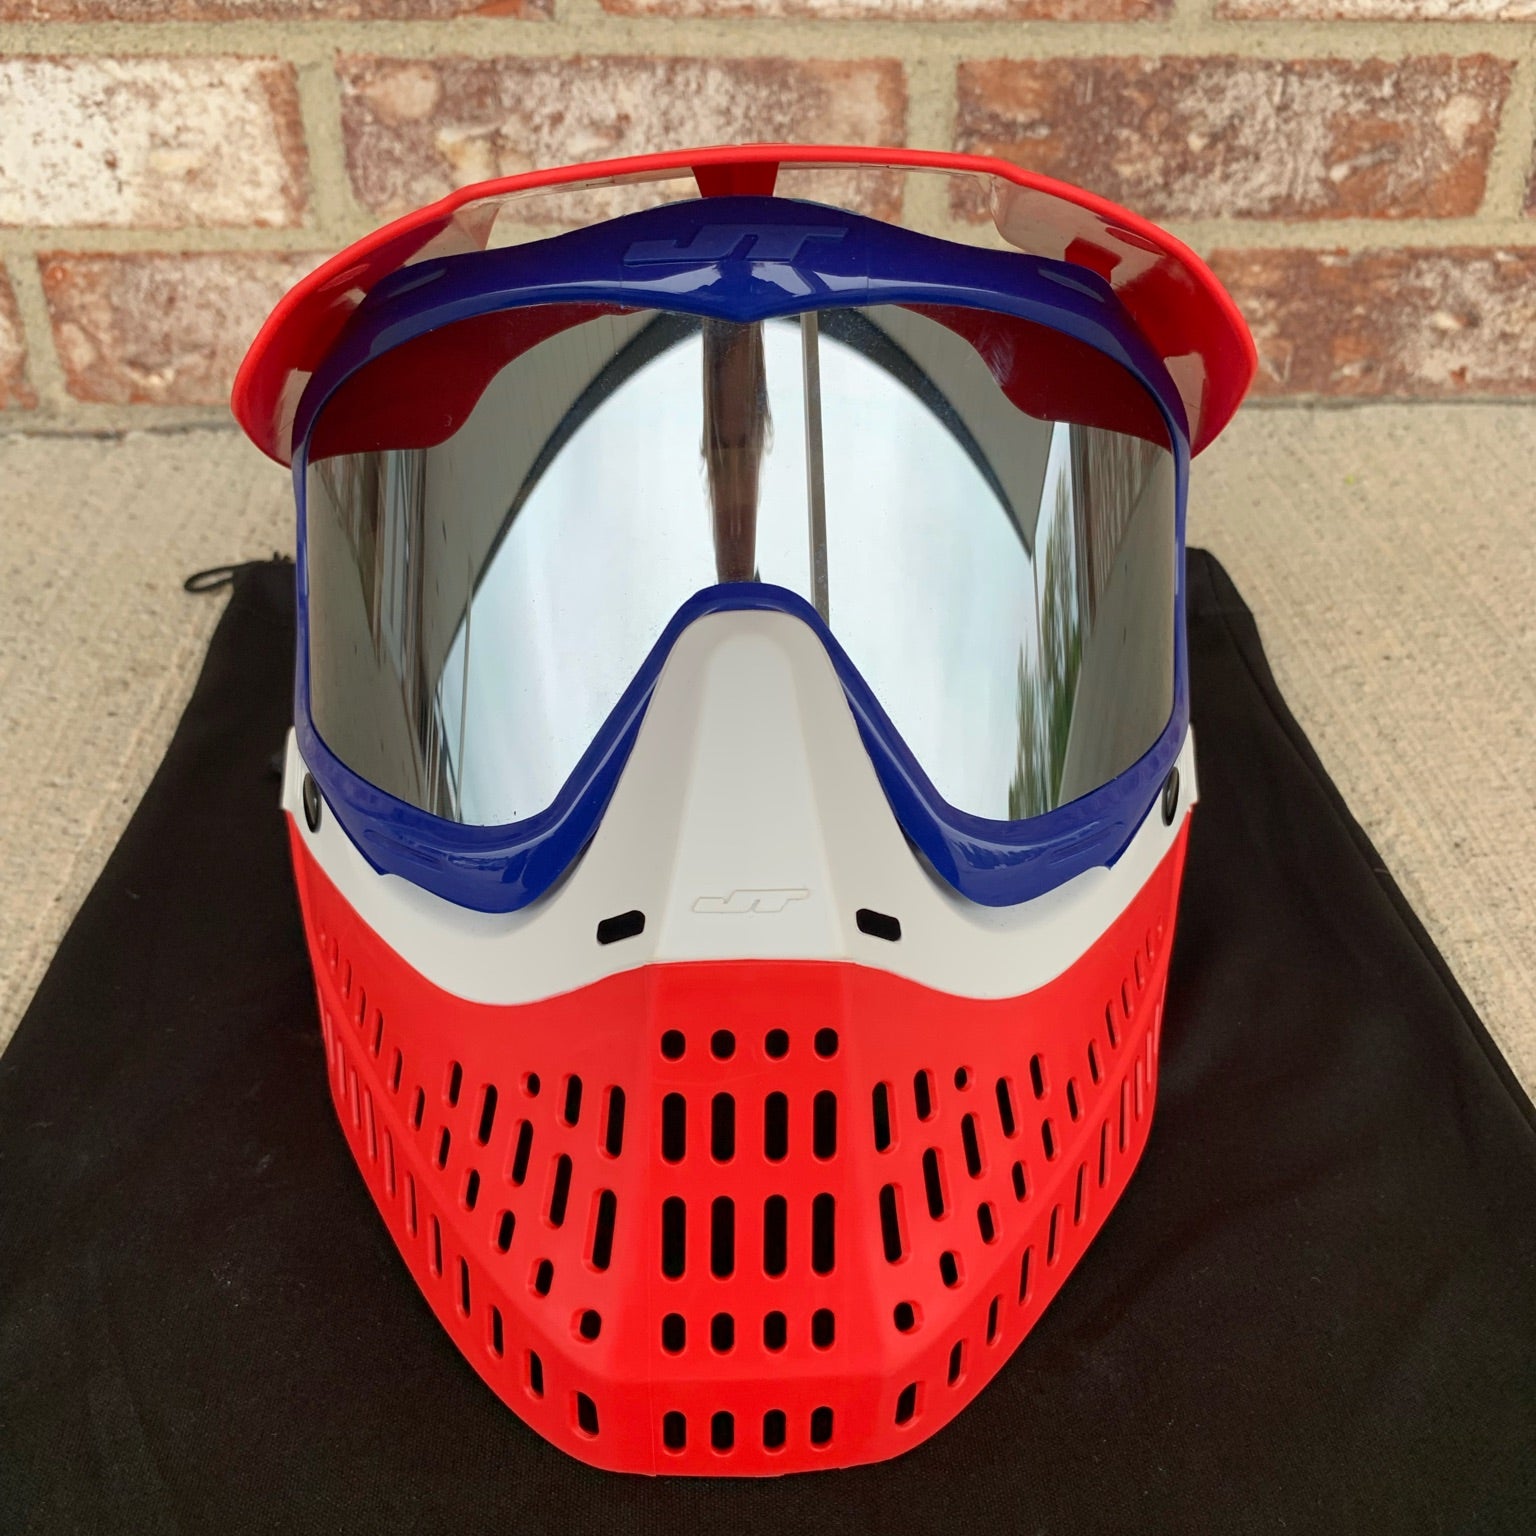 Used JT Proflex Paintball Mask - USA